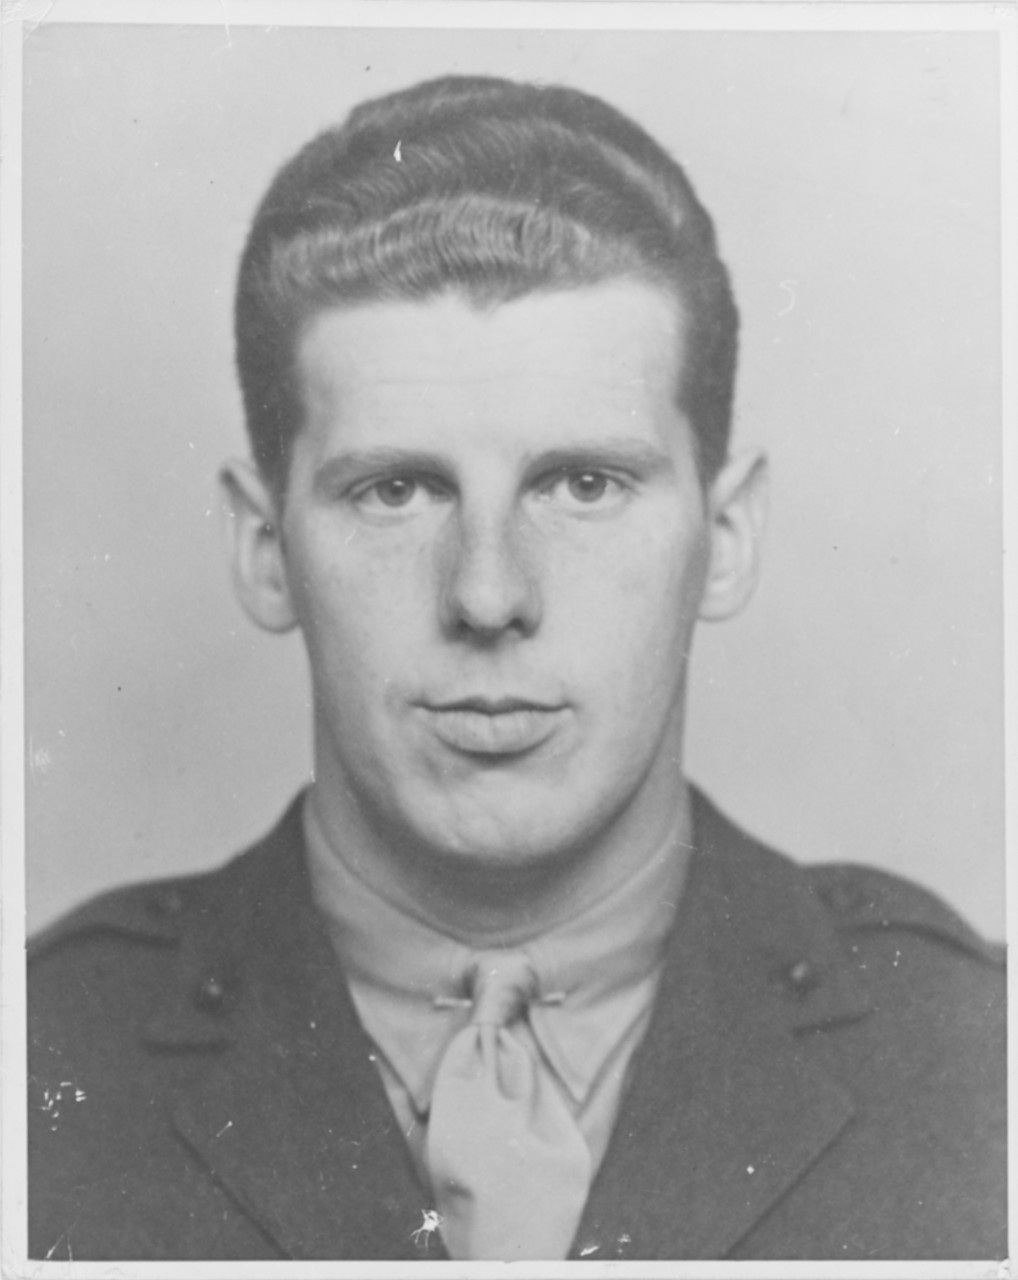 Second Lieutenant Stanley Graves Benner, USMC